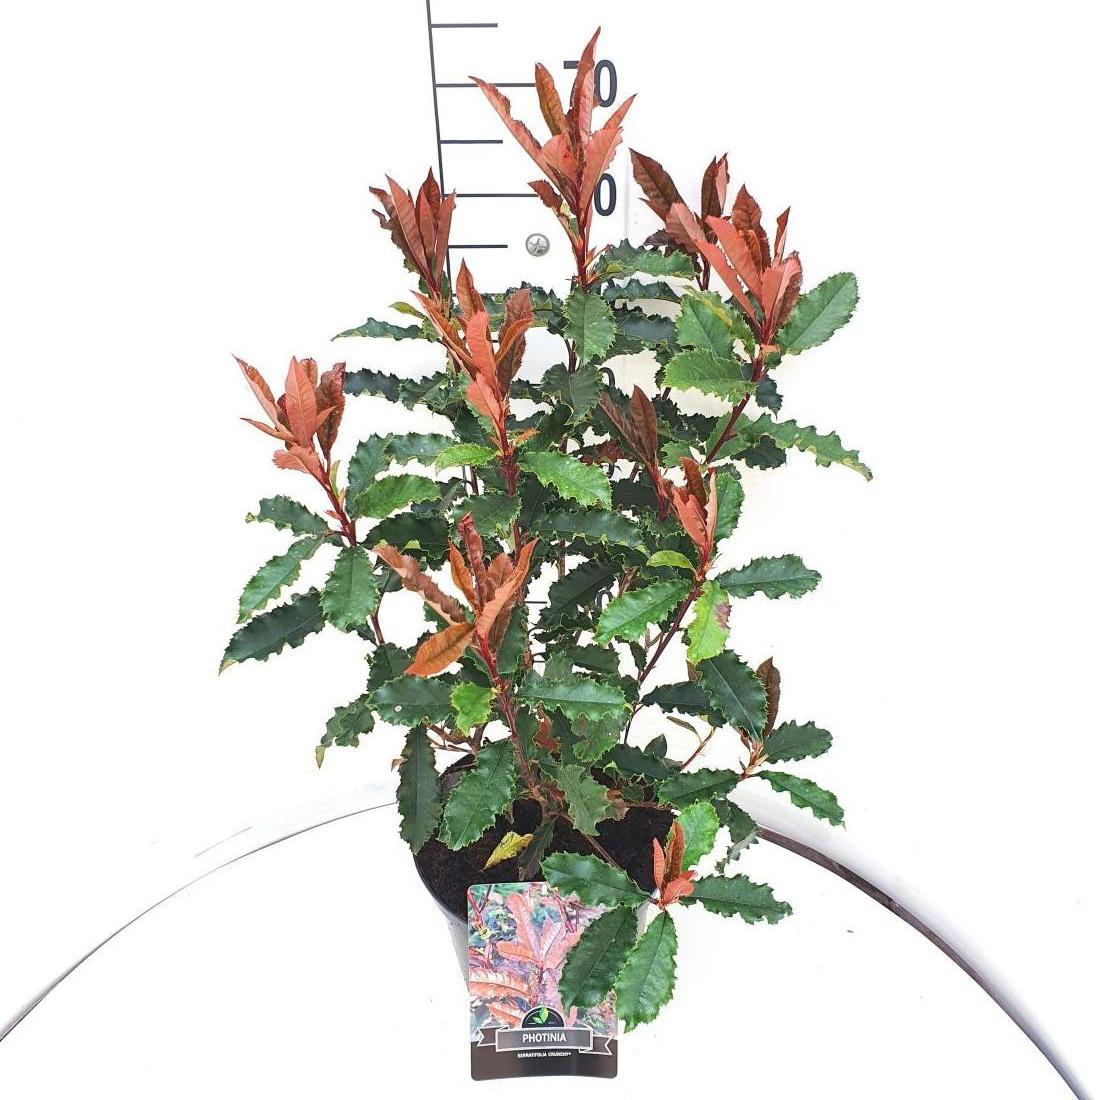 Photinia serratifolia 'Crunchy' C10 40/50